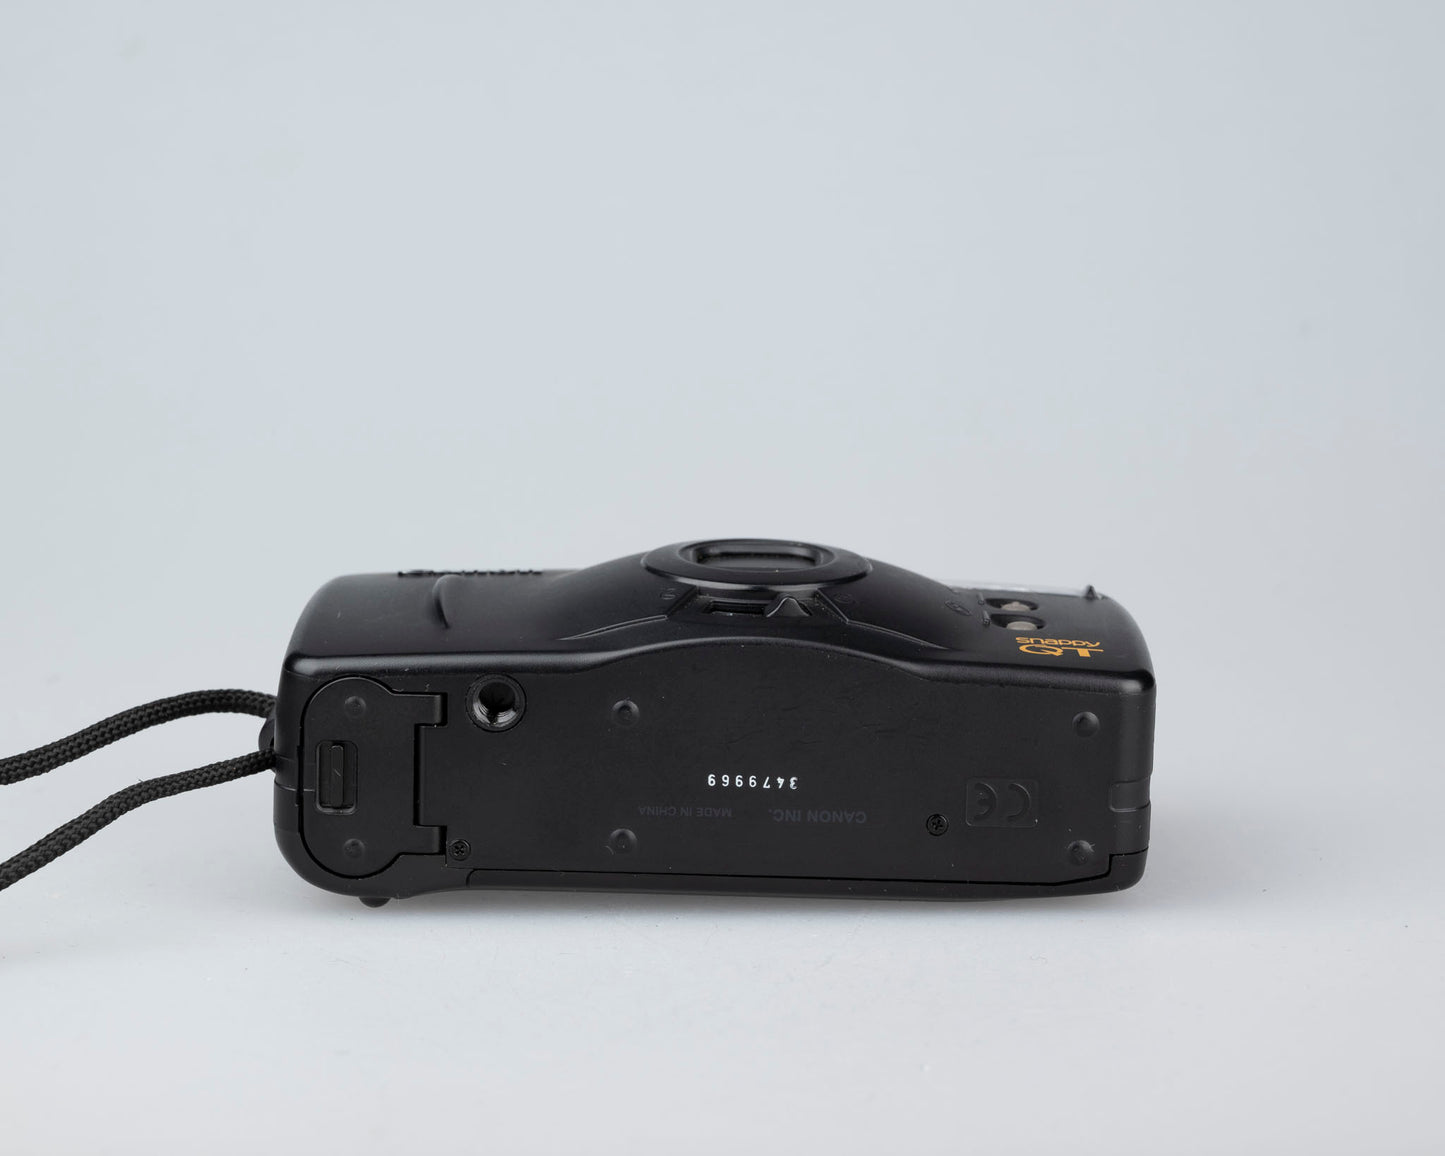 Canon Snappy QT 35mm camera (serial 3479969)